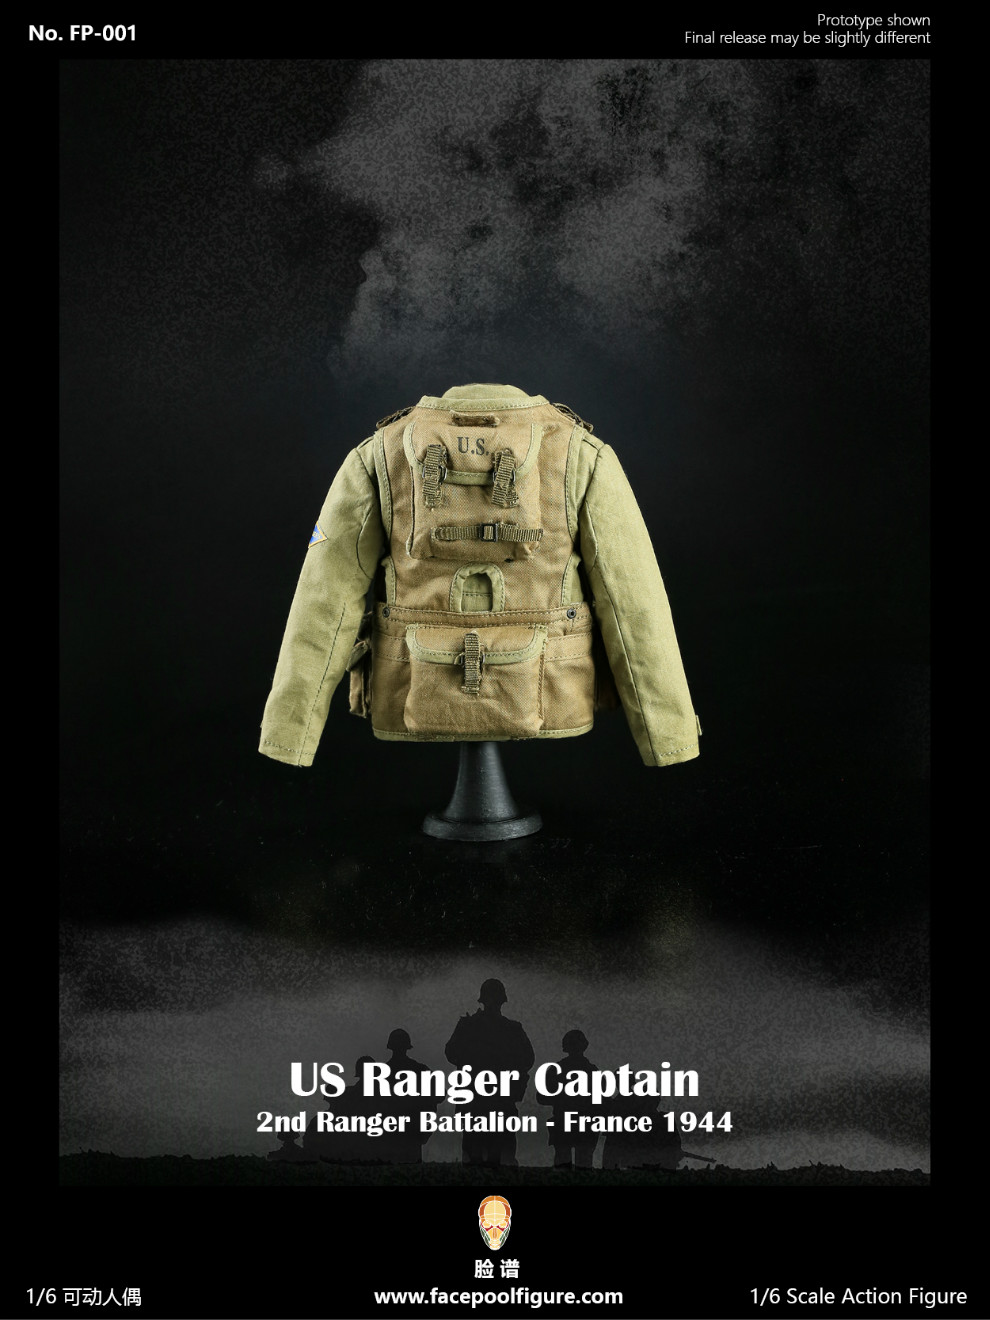 USRanger - NEW PRODUCT: update notice Facepool: 1/6 WWII US RANGER CAPTAIN World War II US Rangers Captain - Anniversary 23224211